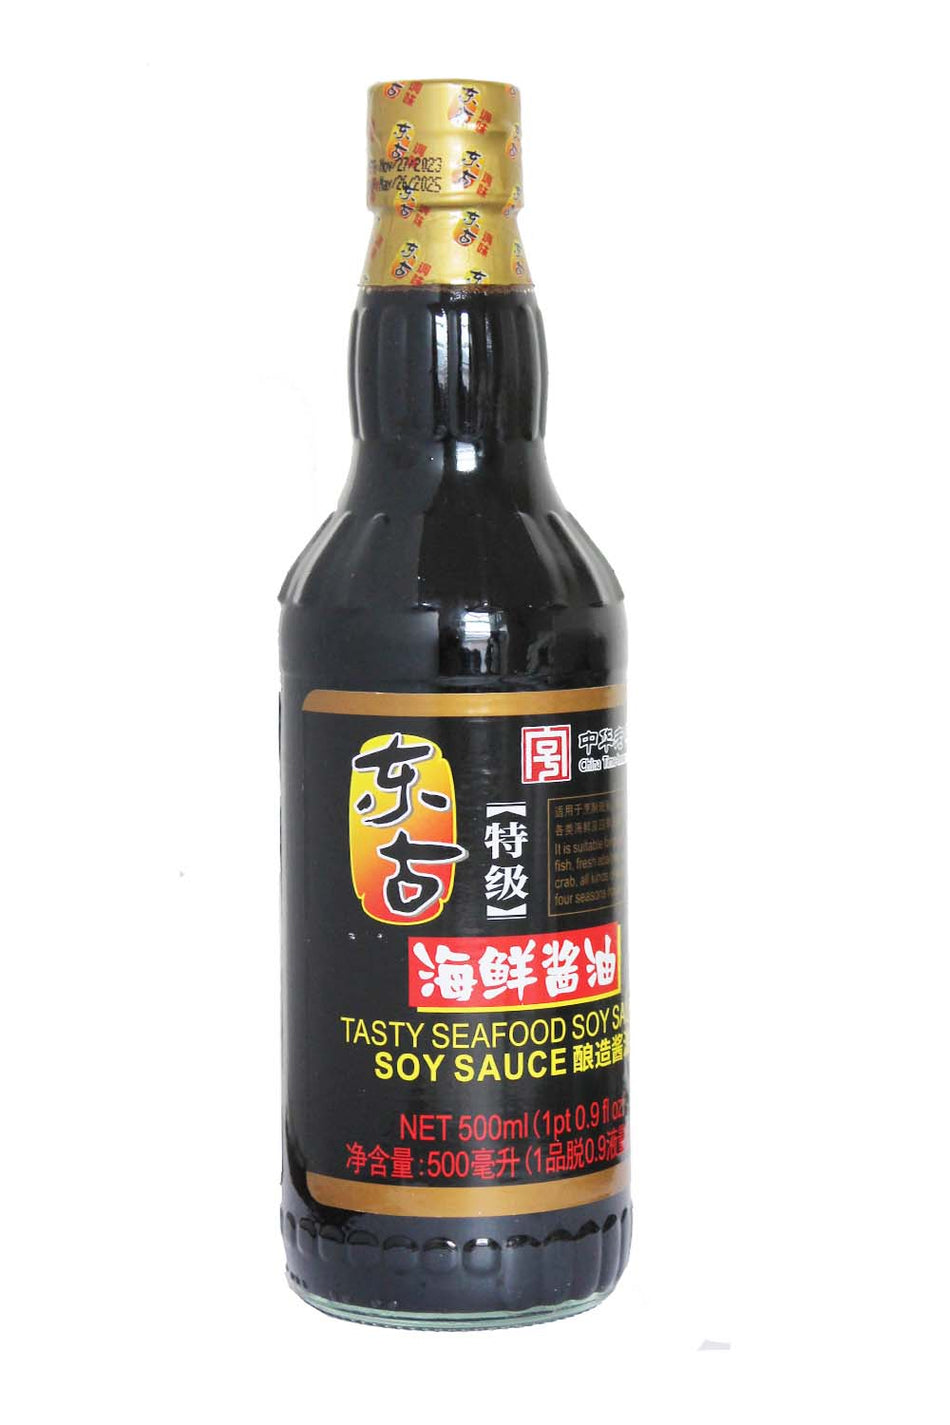 Donggu Tasty Seafood  soy sauce